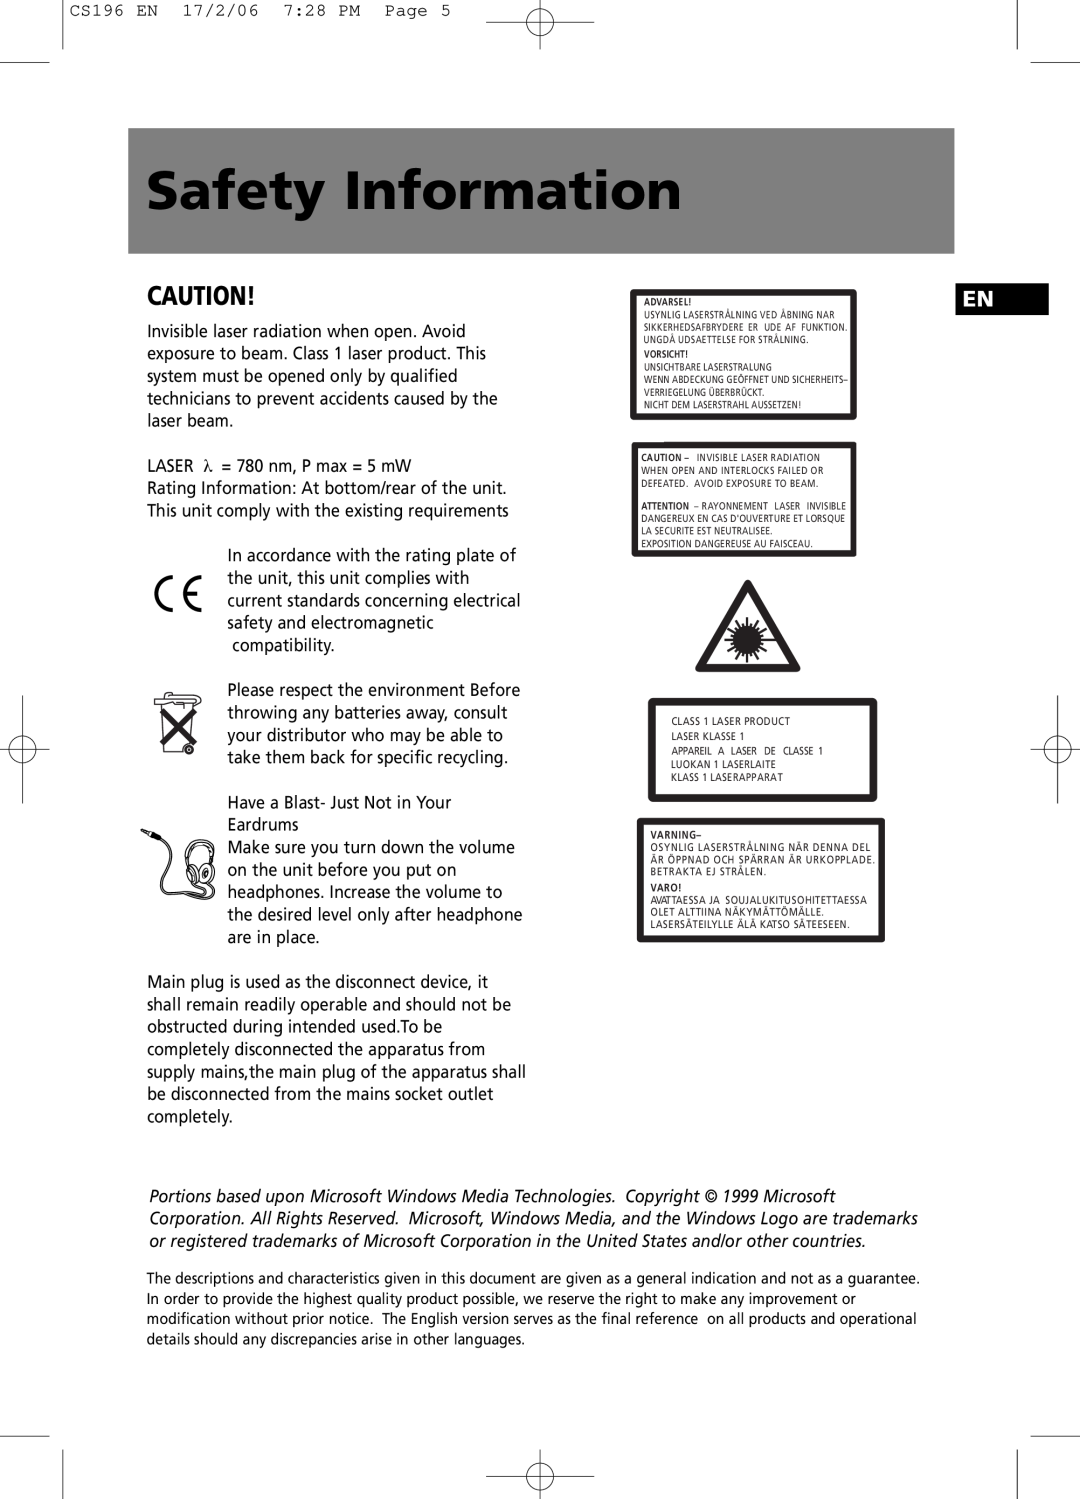 Technicolor - Thomson CS196 user manual Safety Information 